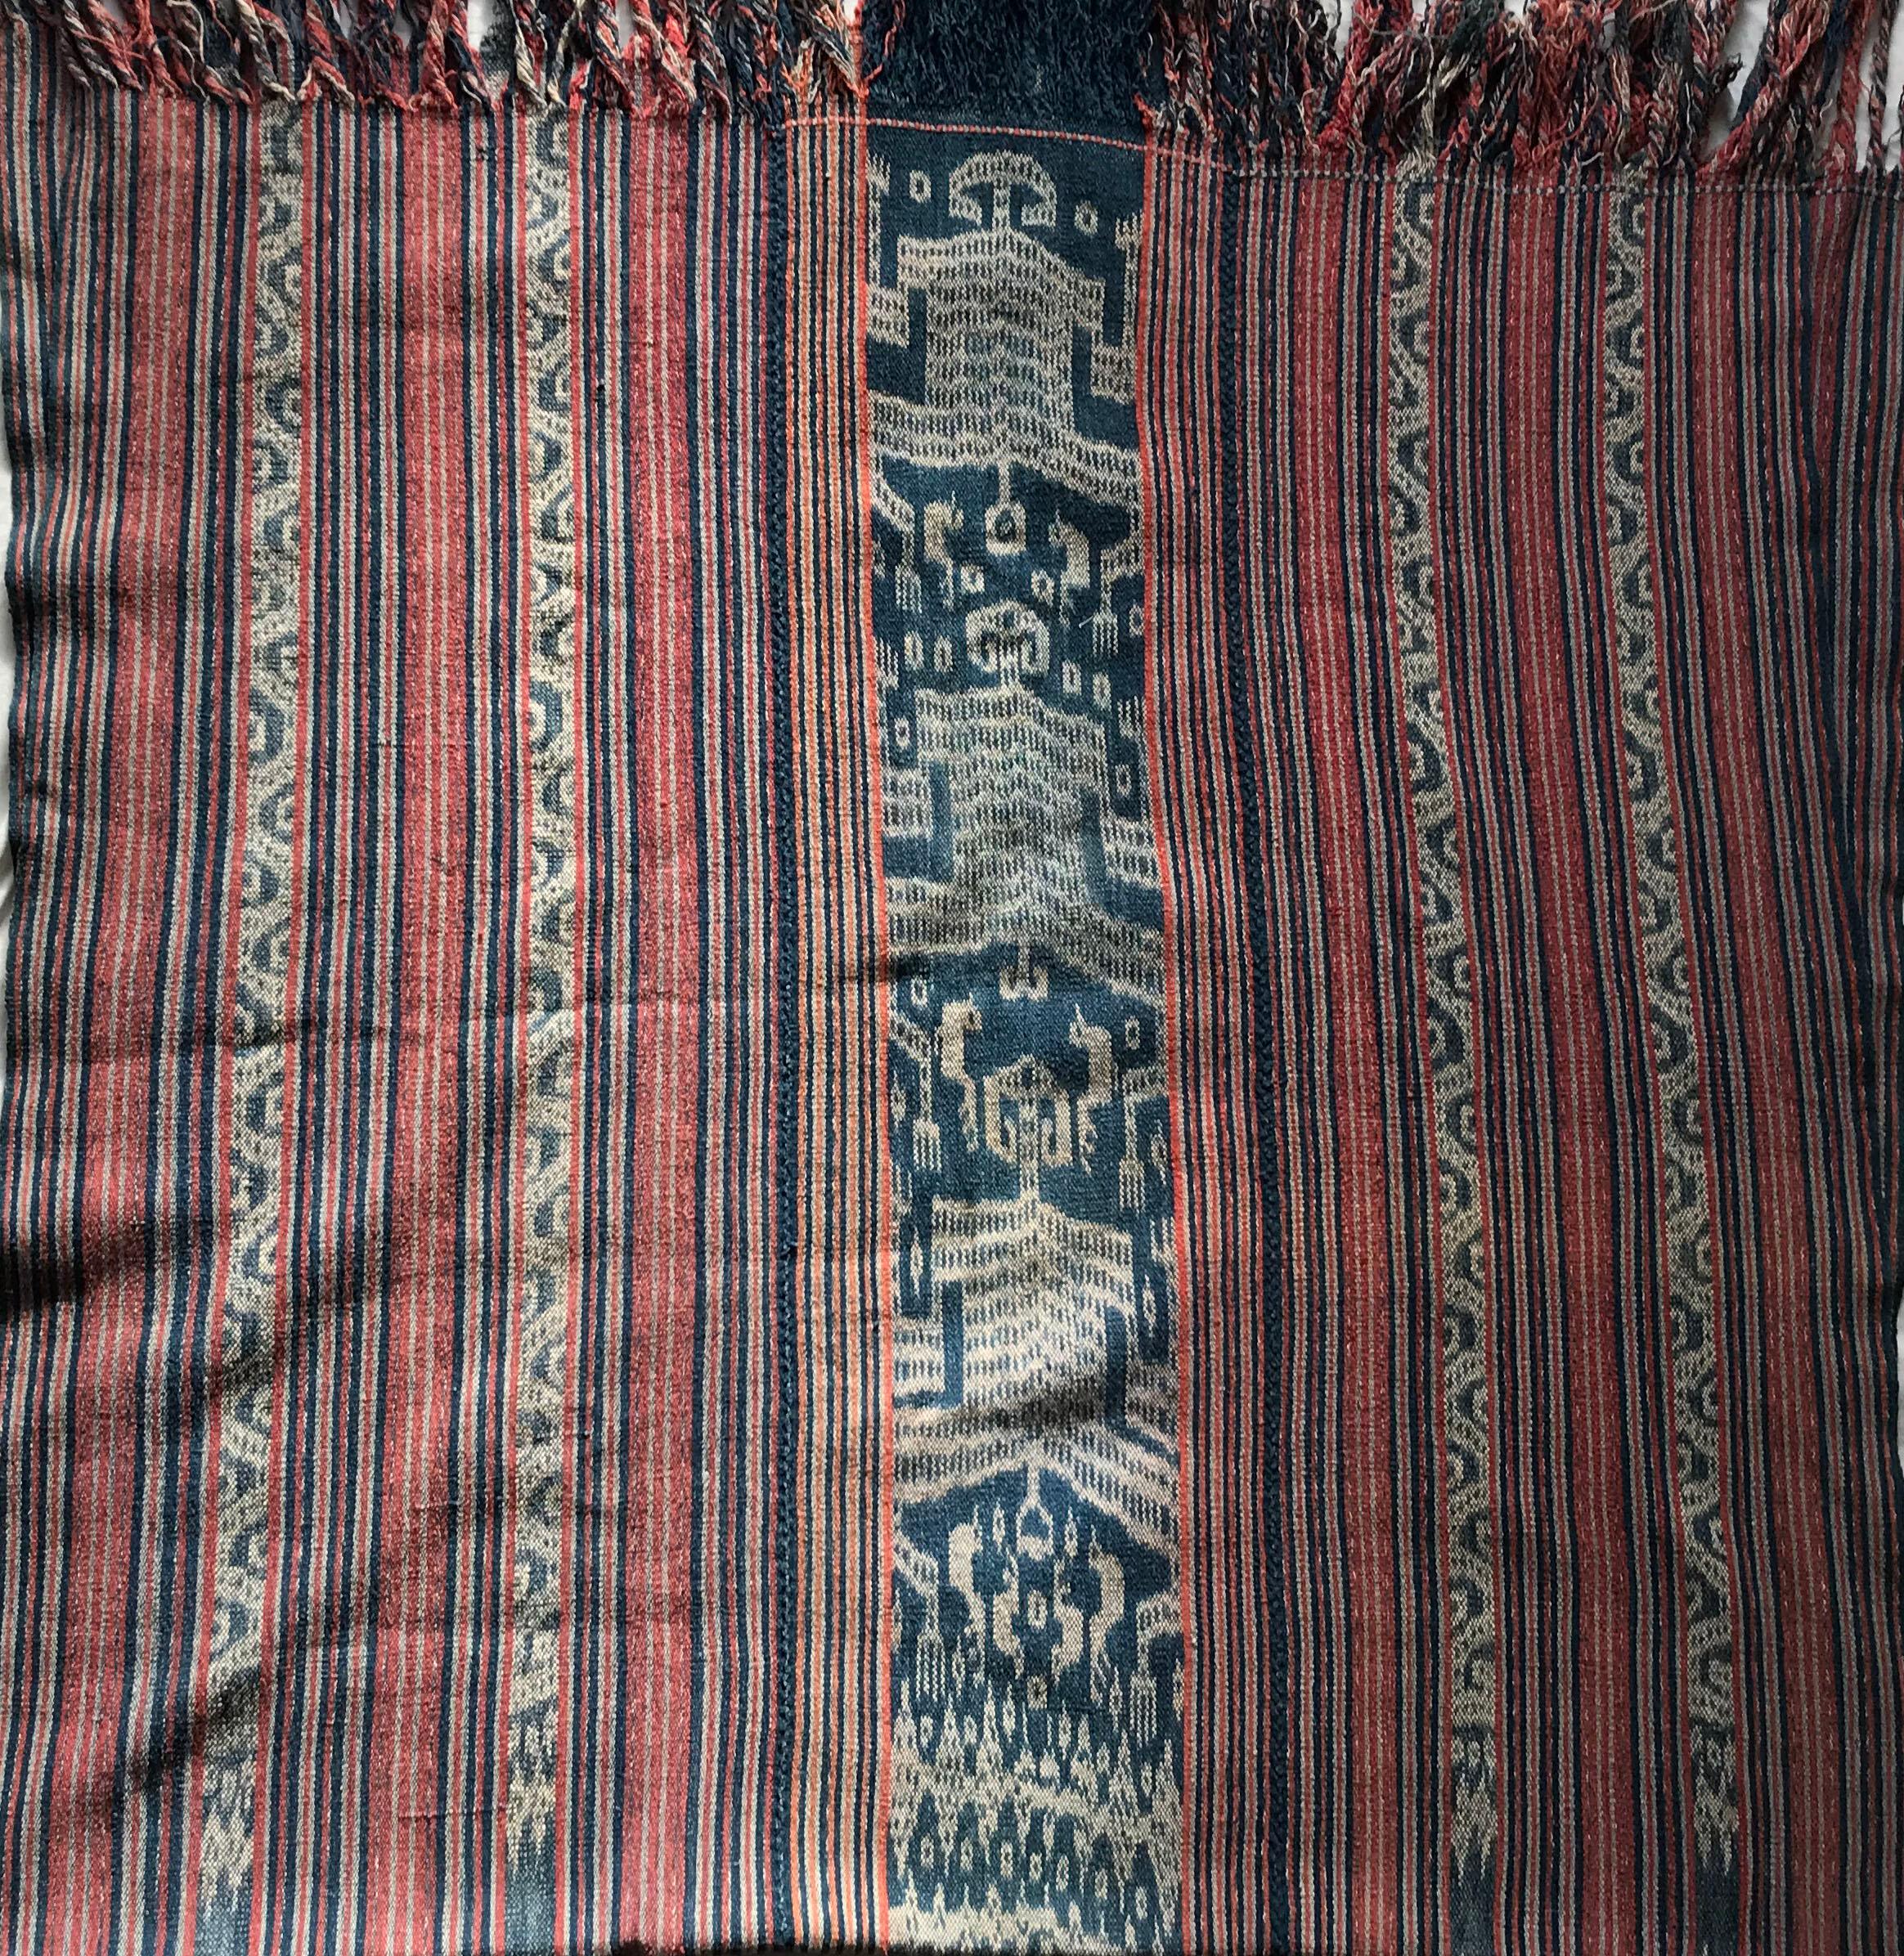 Woven Vintage Ikat Cloth Timor Indonesia Asian Textiles Home Decor